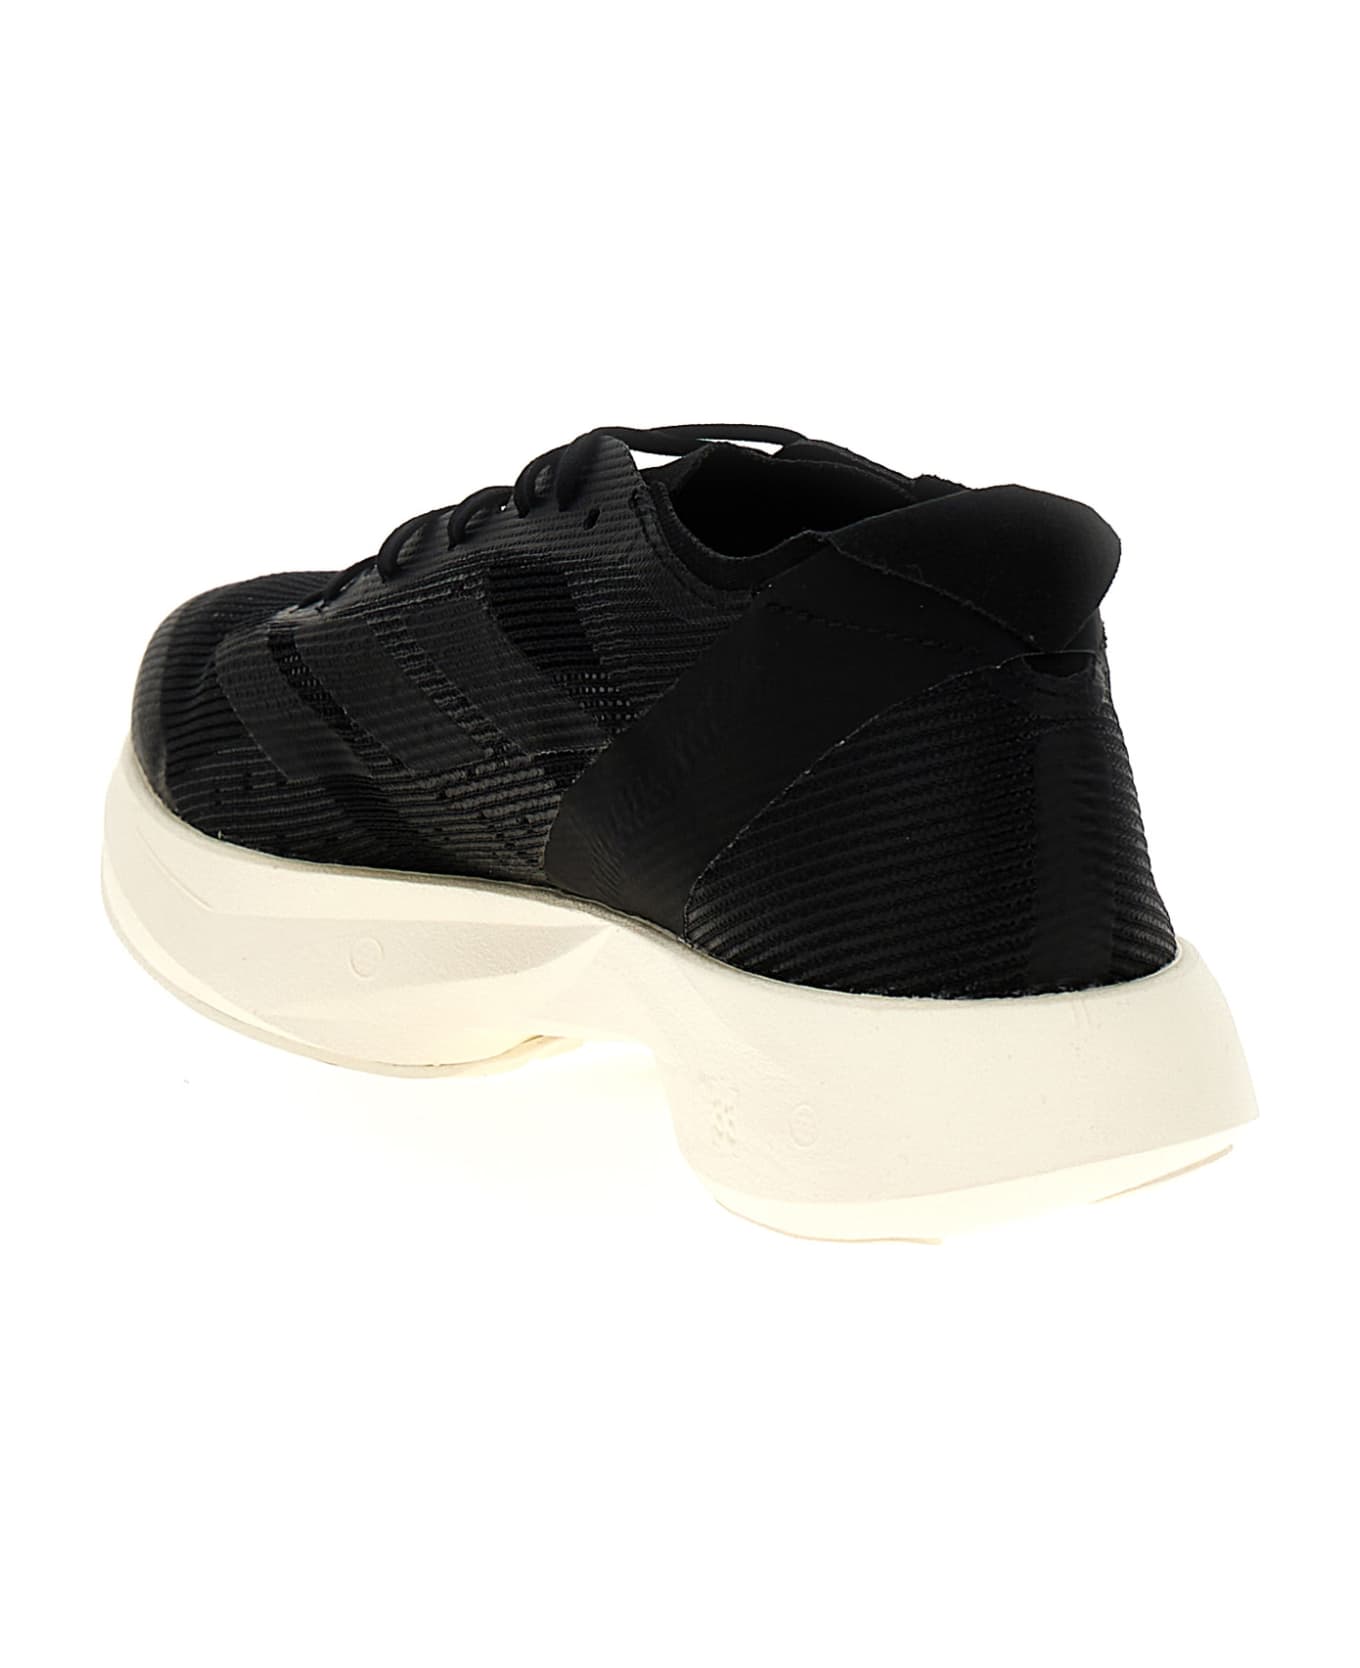 Y-3 'takumi Sen 10' Sneakers - White/Black